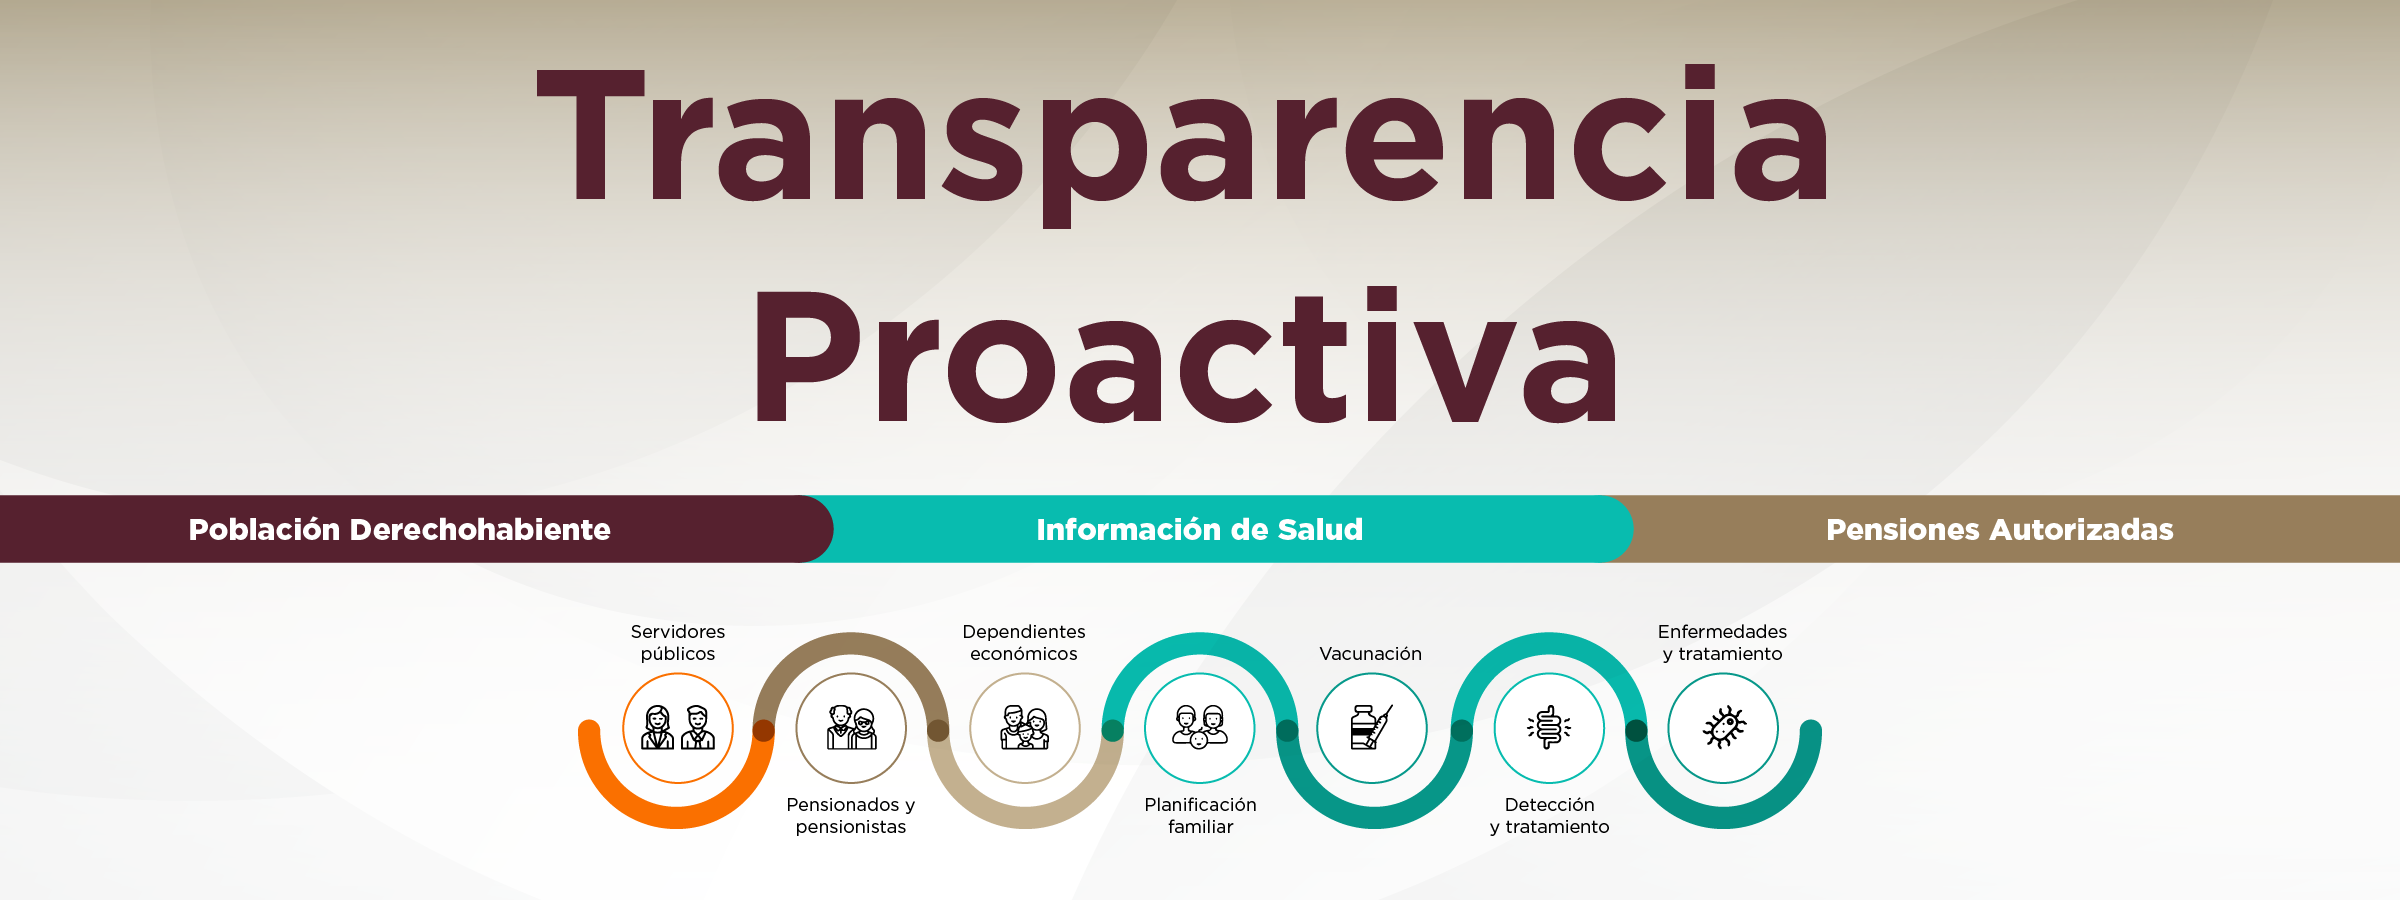 Transparencia Proactiva 